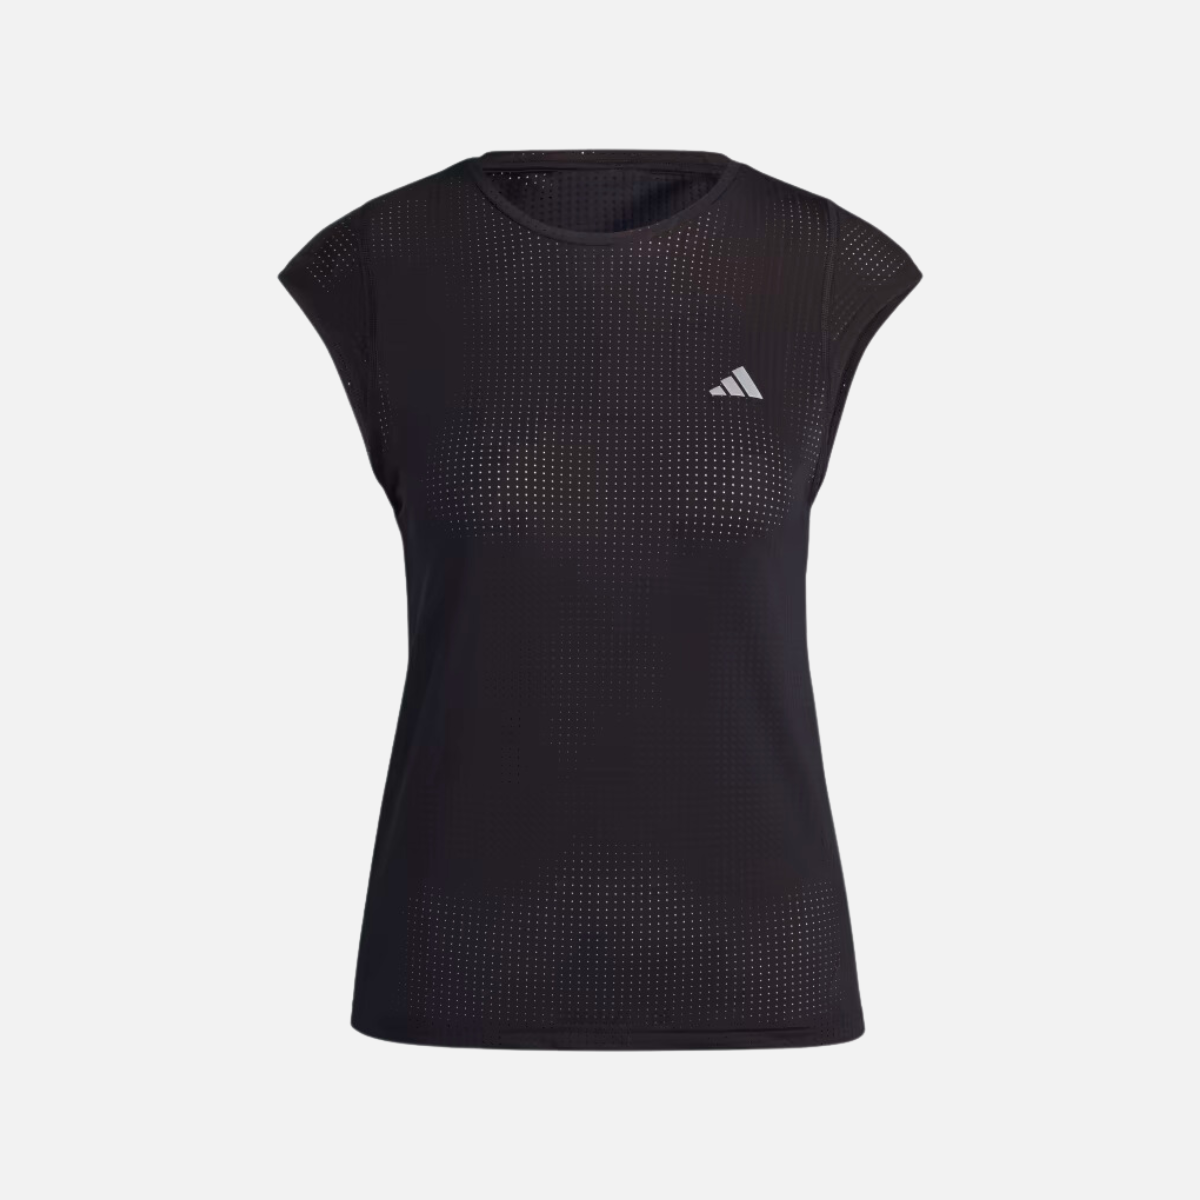 Adidas Fast Running Women's T-shirt - Black